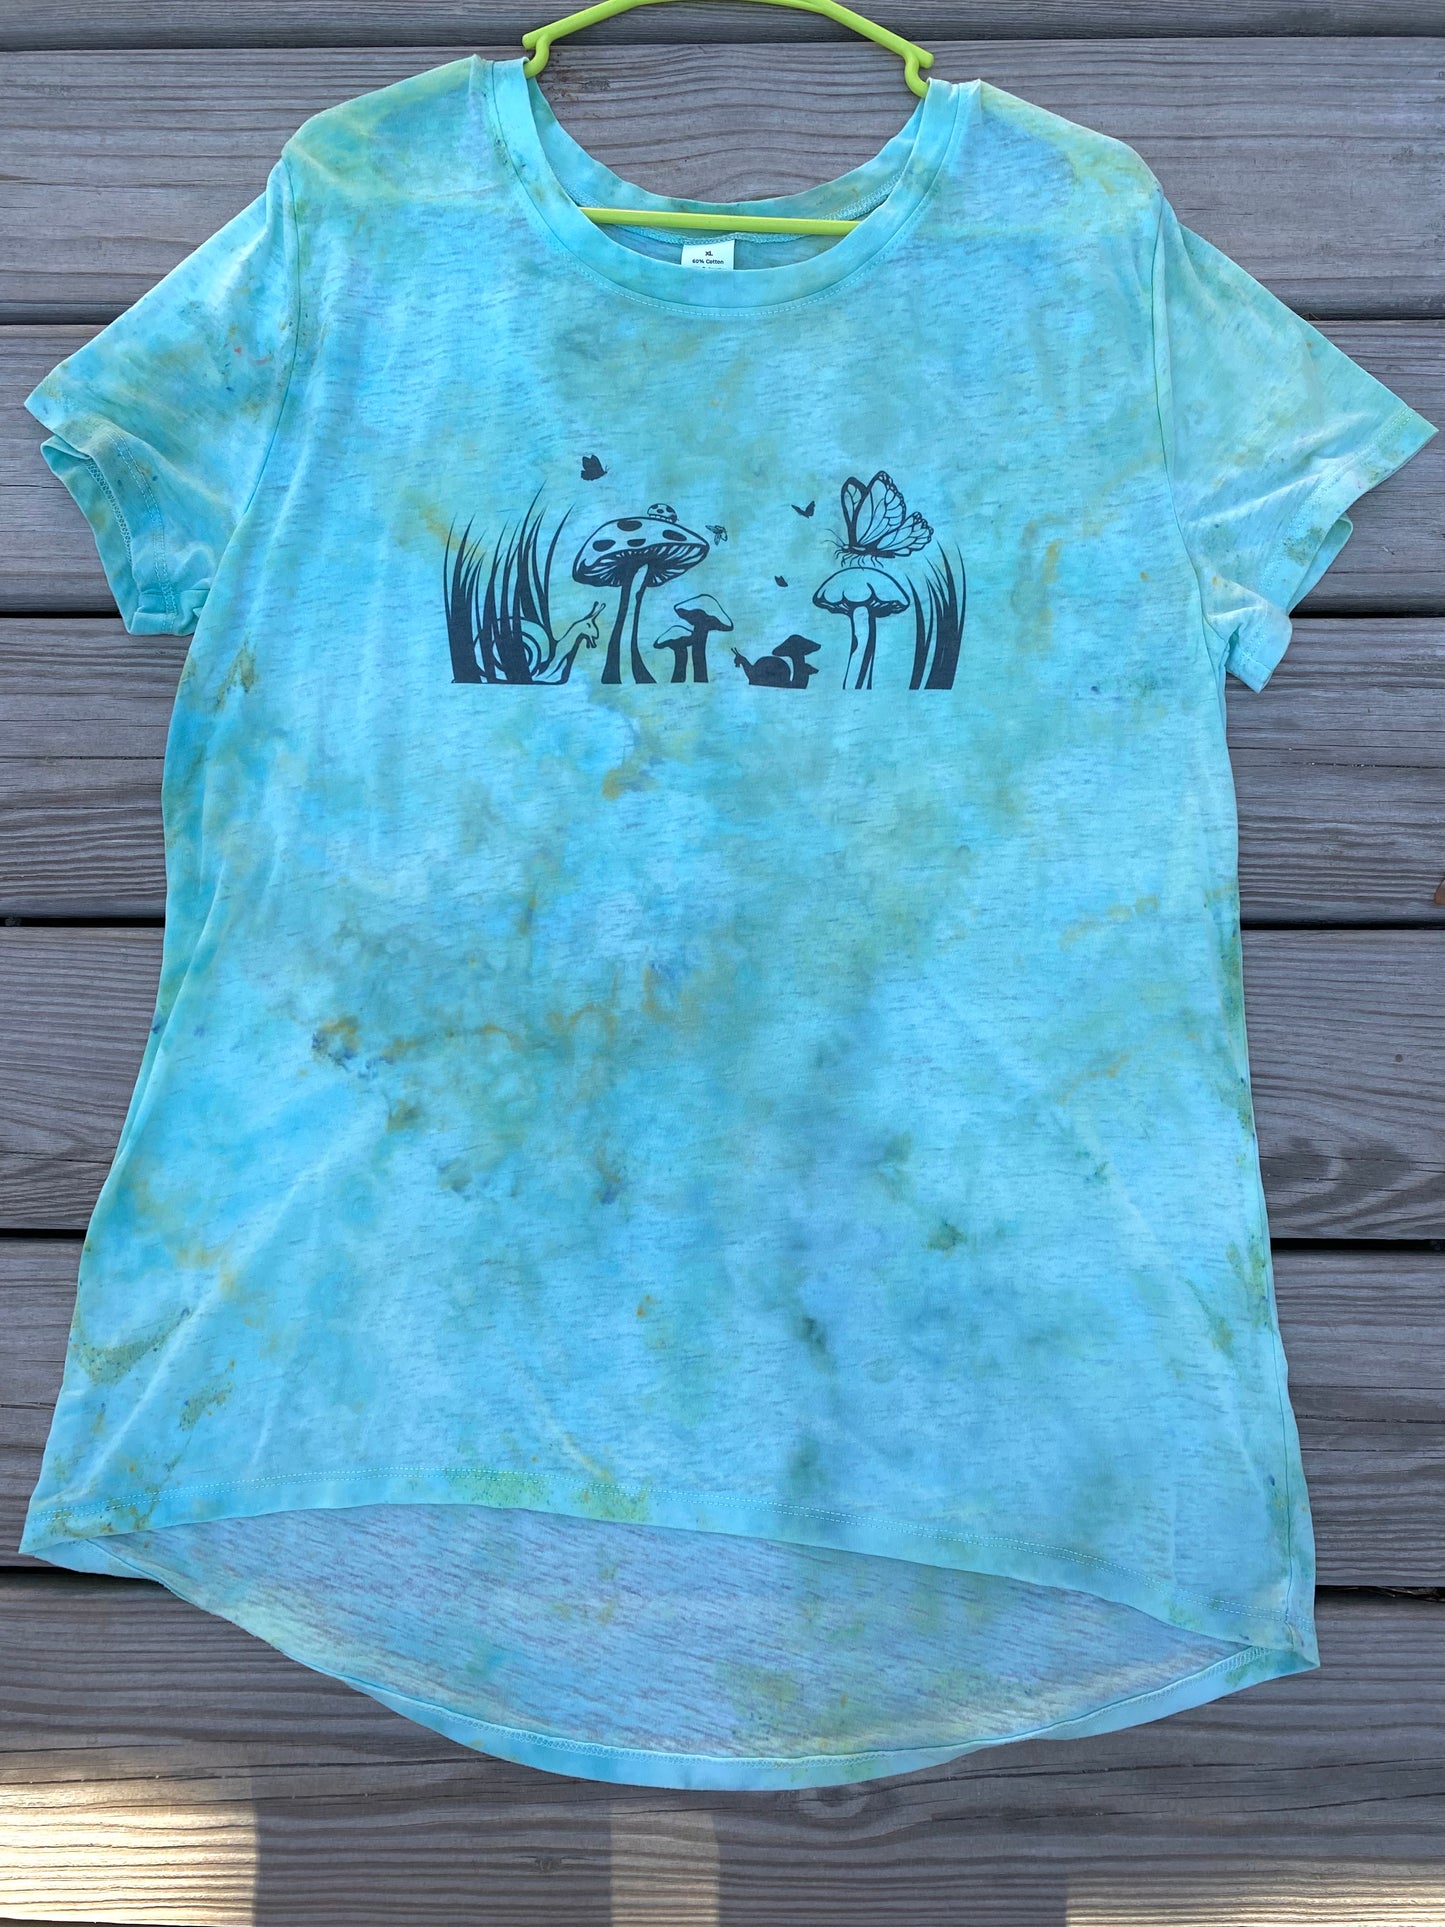 Xl very lightweight thin shirt beach cover mushrooms snails nature themed blues greens